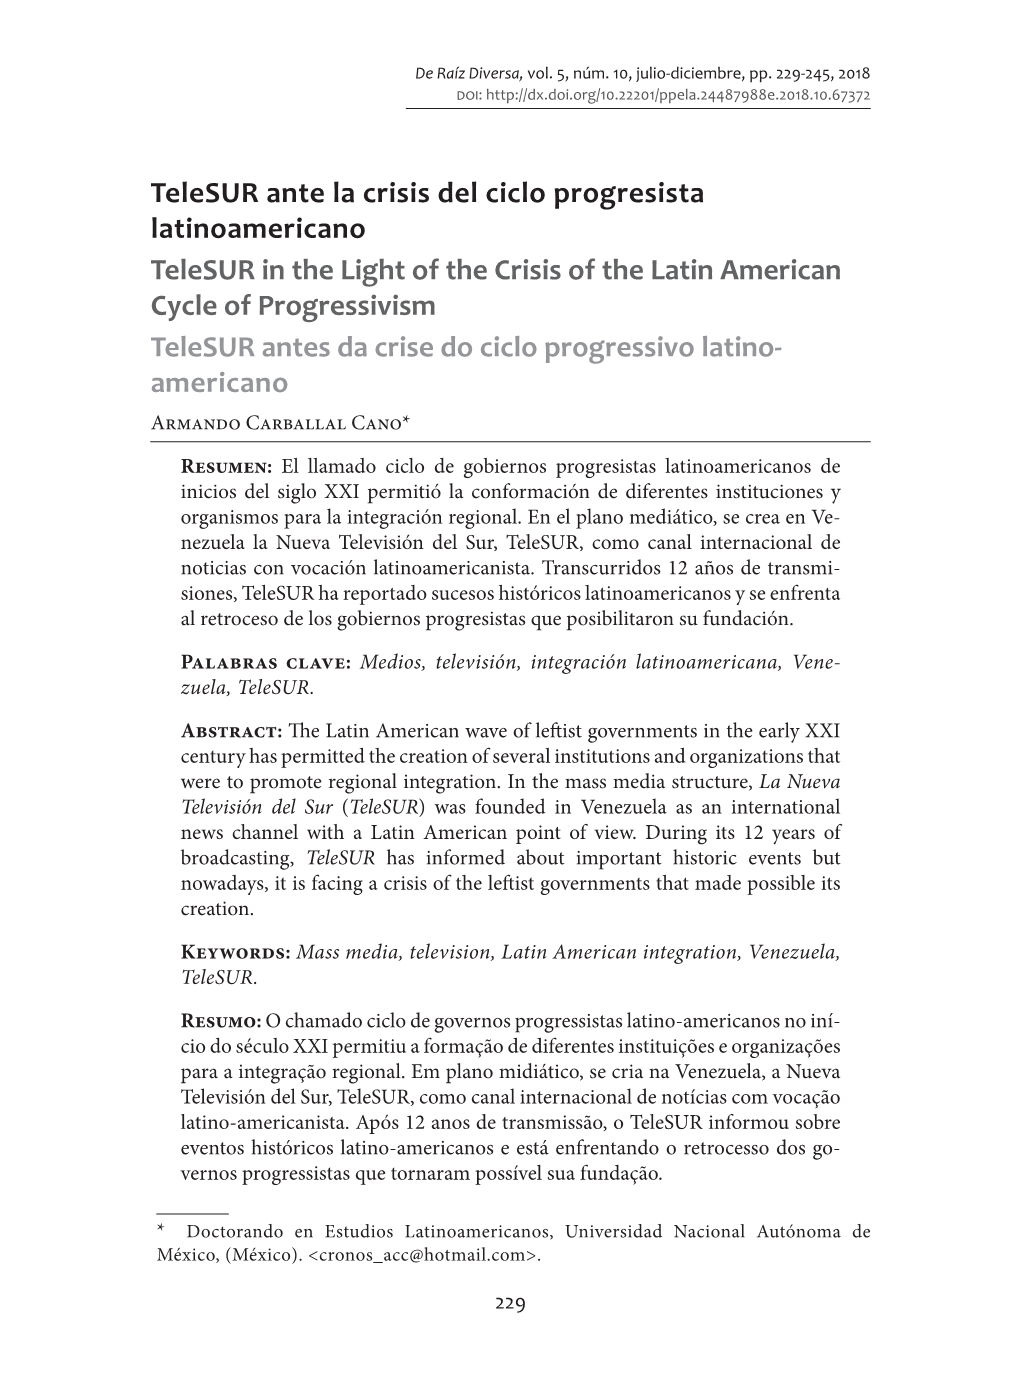 Telesur Ante La Crisis Del Ciclo Progresista Latinoamericano